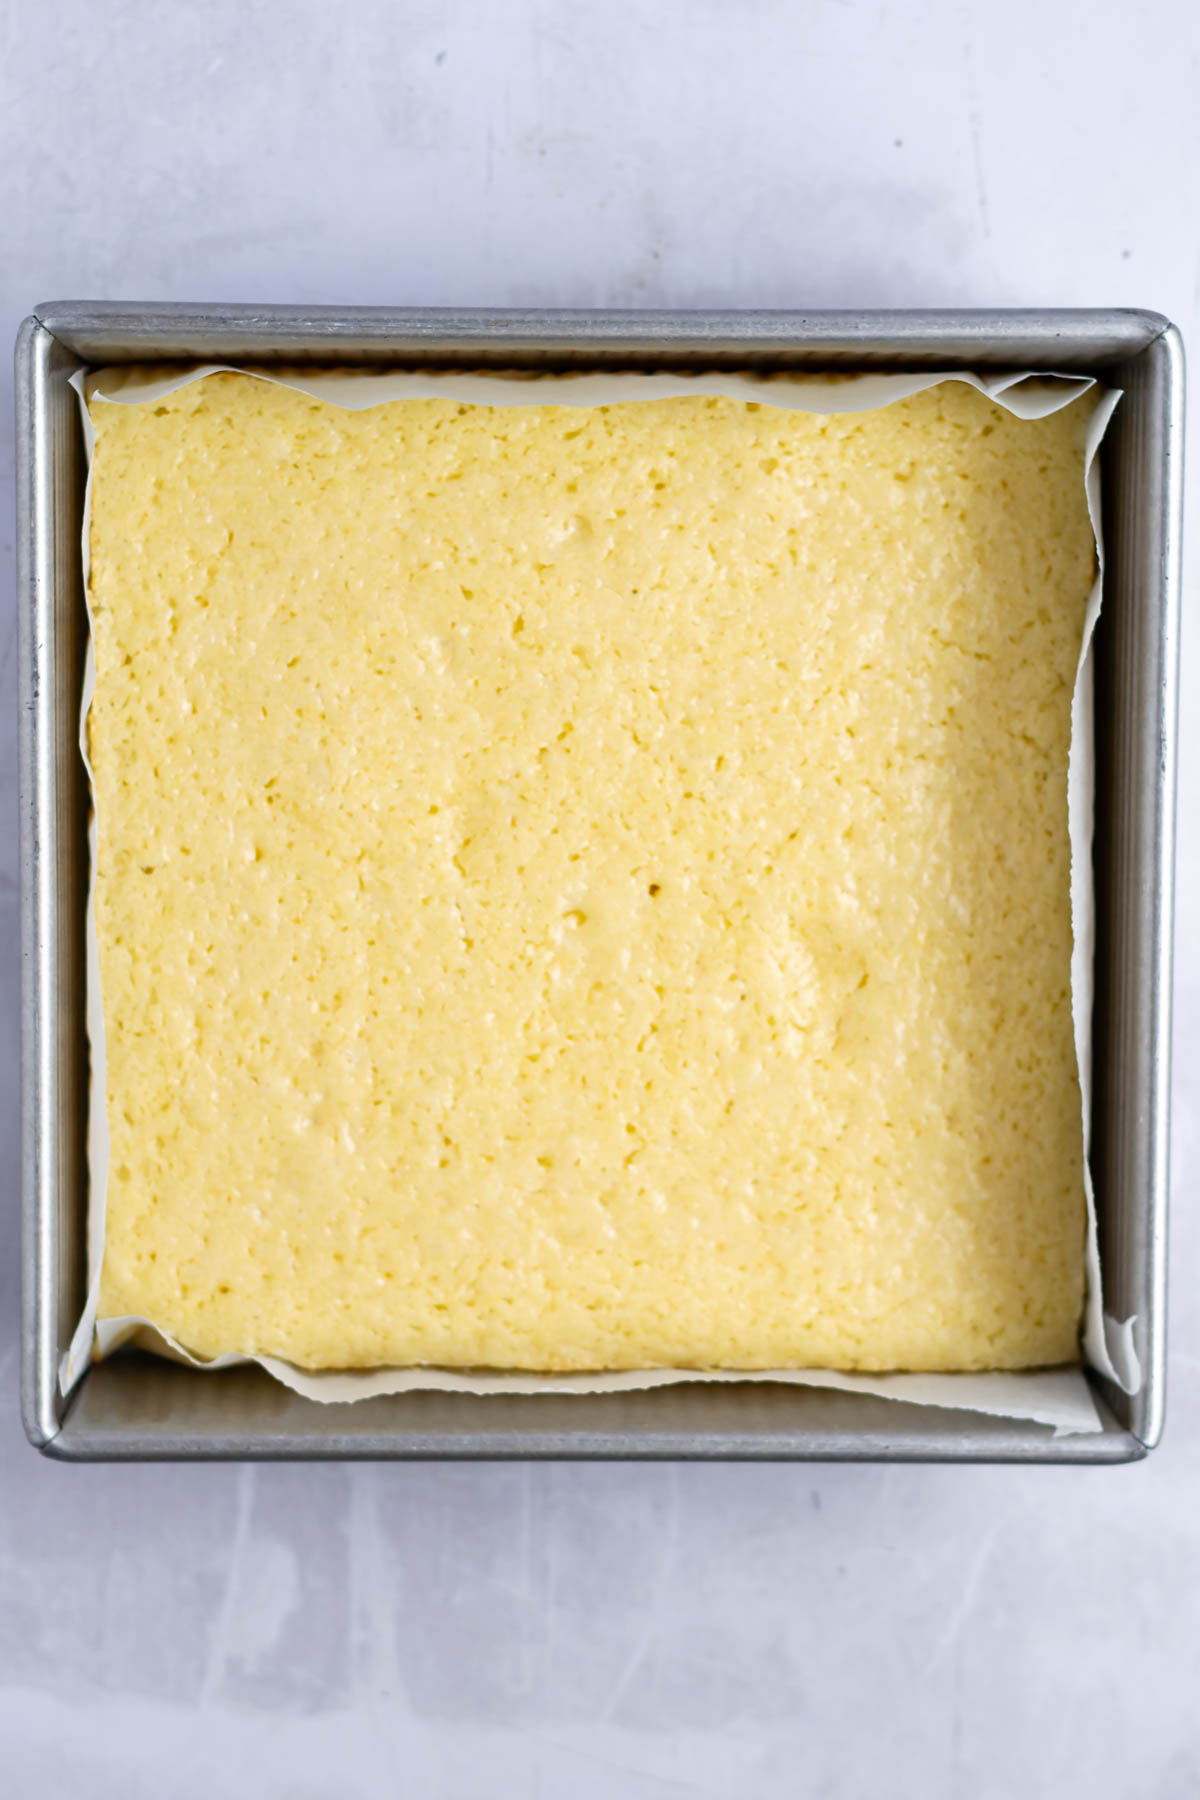 baked lemon snack cake in an 8x8 pan